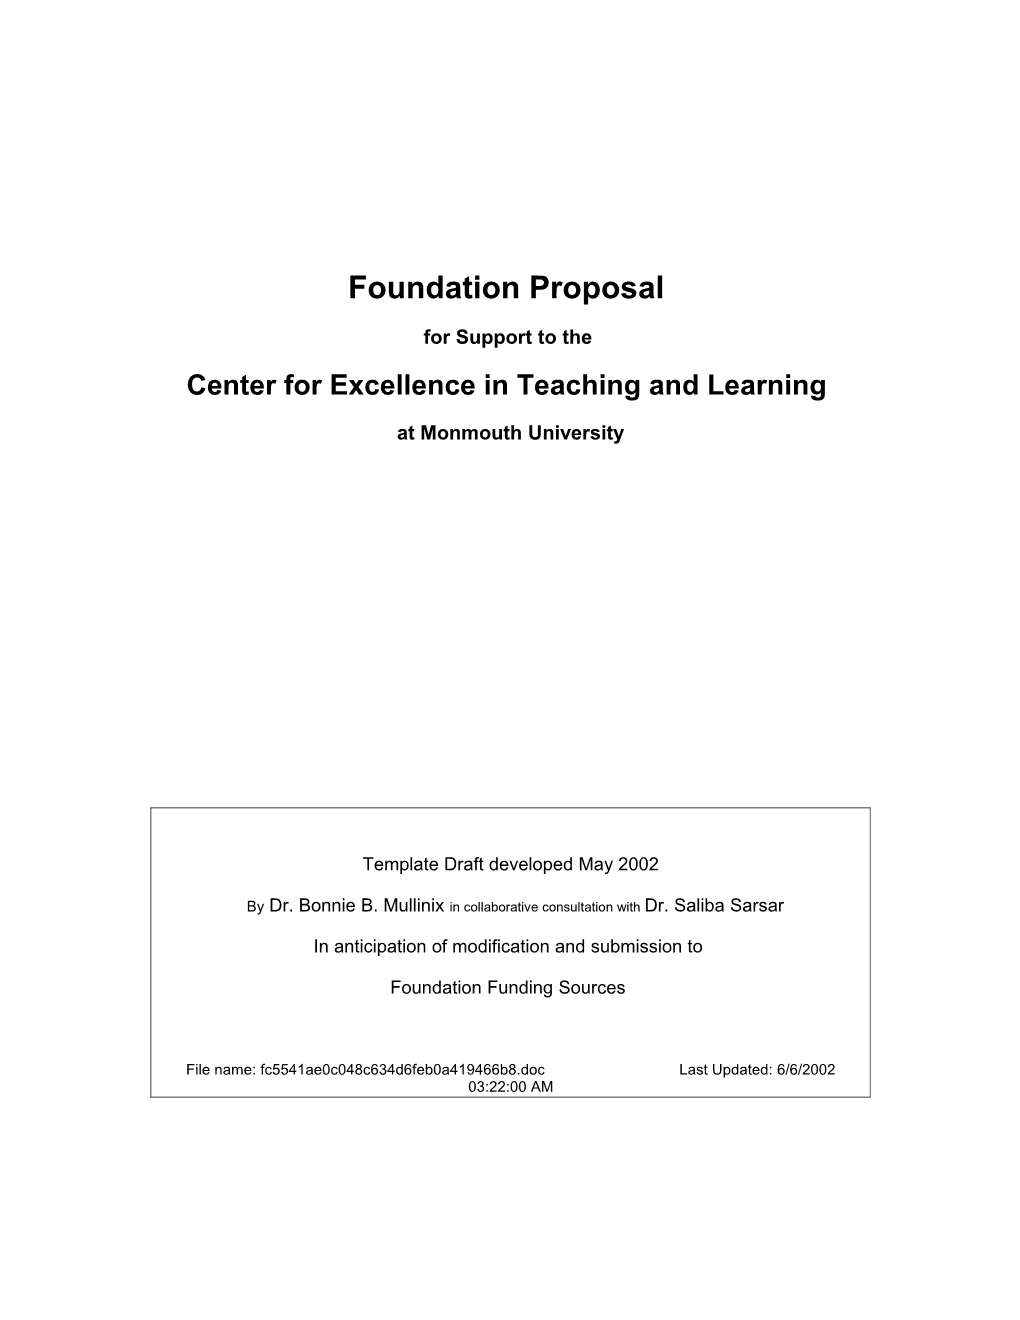 Foundation Proposal Outline